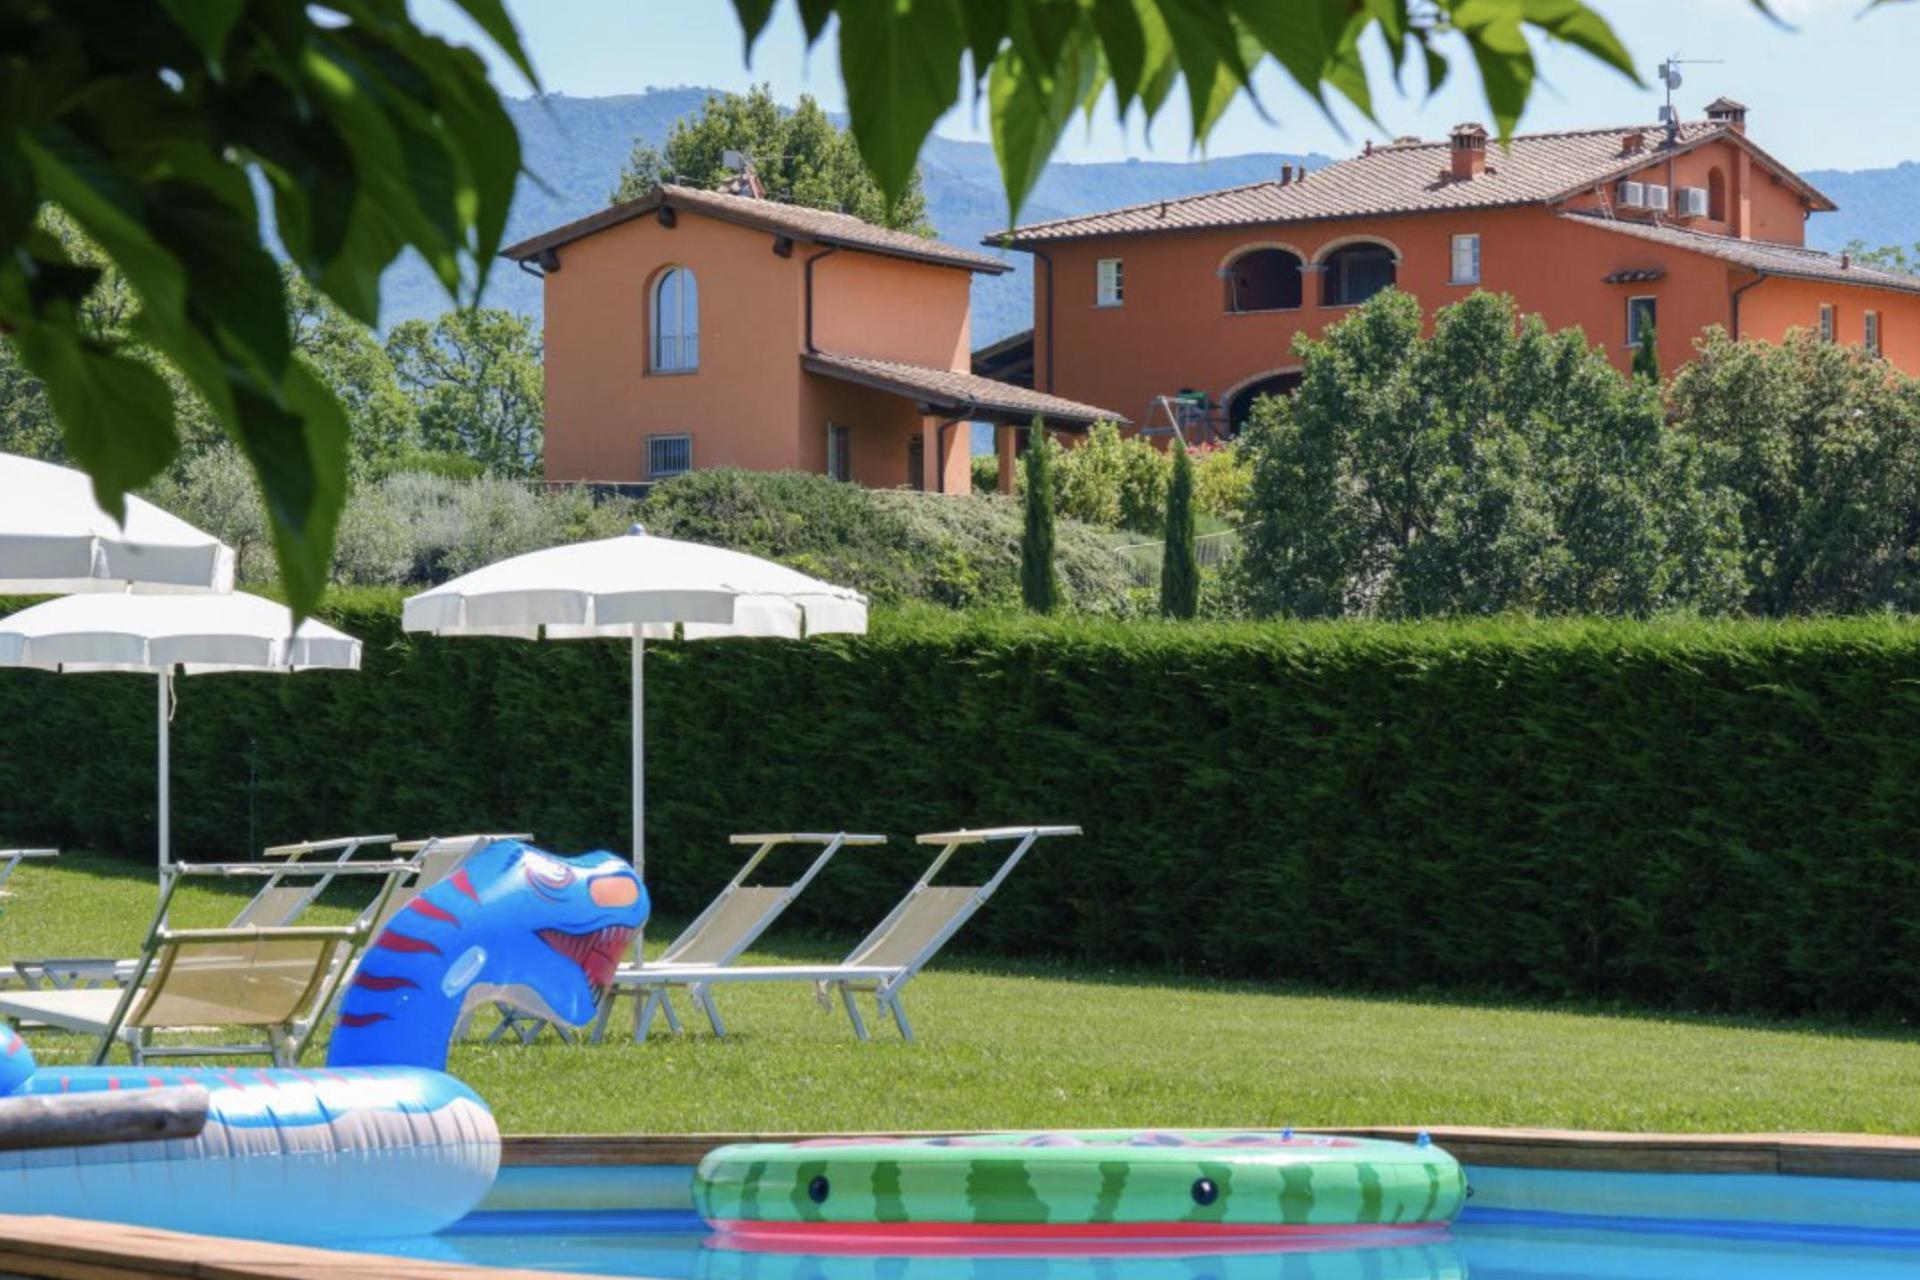 Geweldige agriturismo vlakbij Florence met groot kinderbad